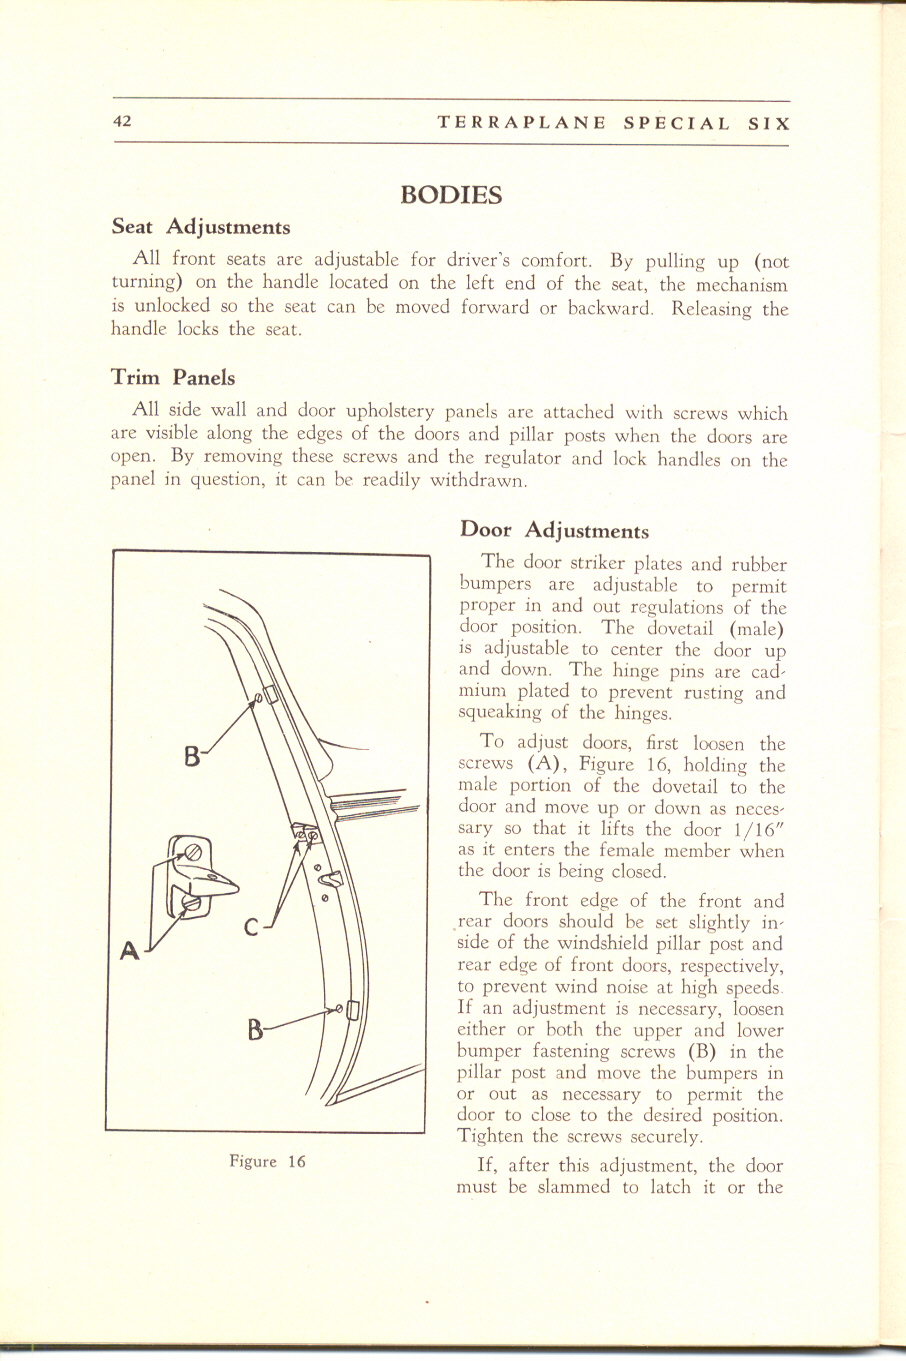 1935 Terraplane Manual-42